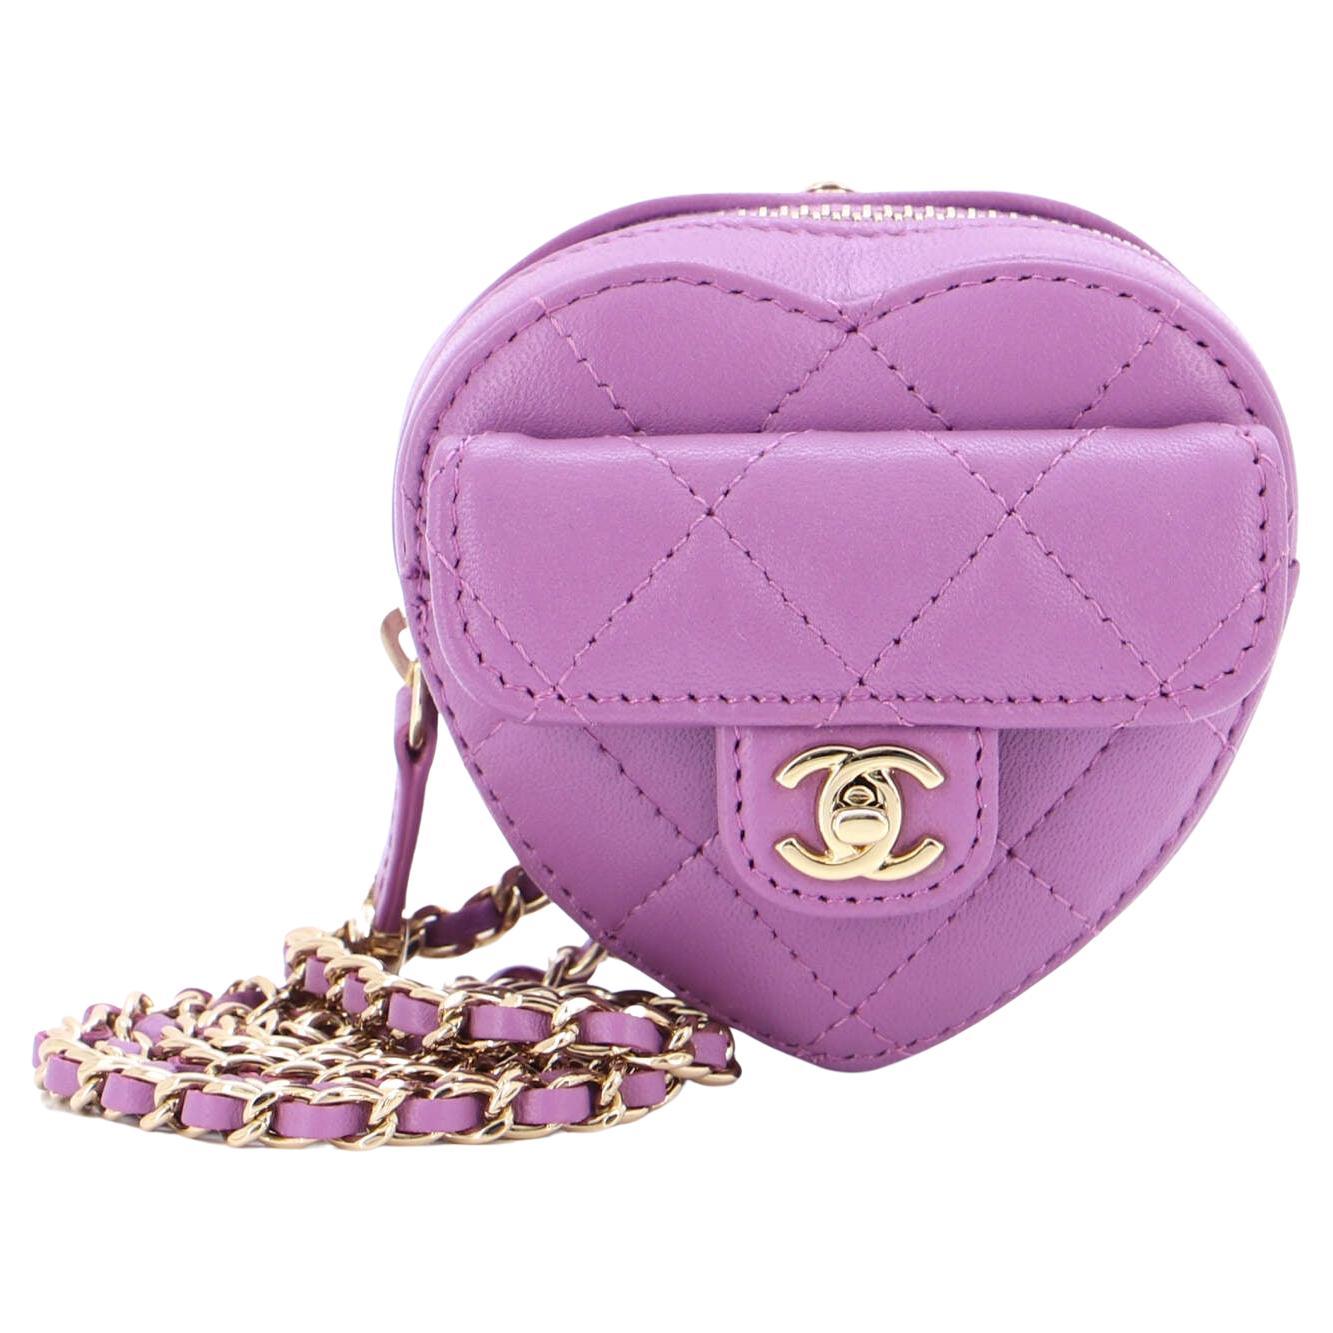 Chanel Purple Heart Bag - 3 For Sale on 1stDibs